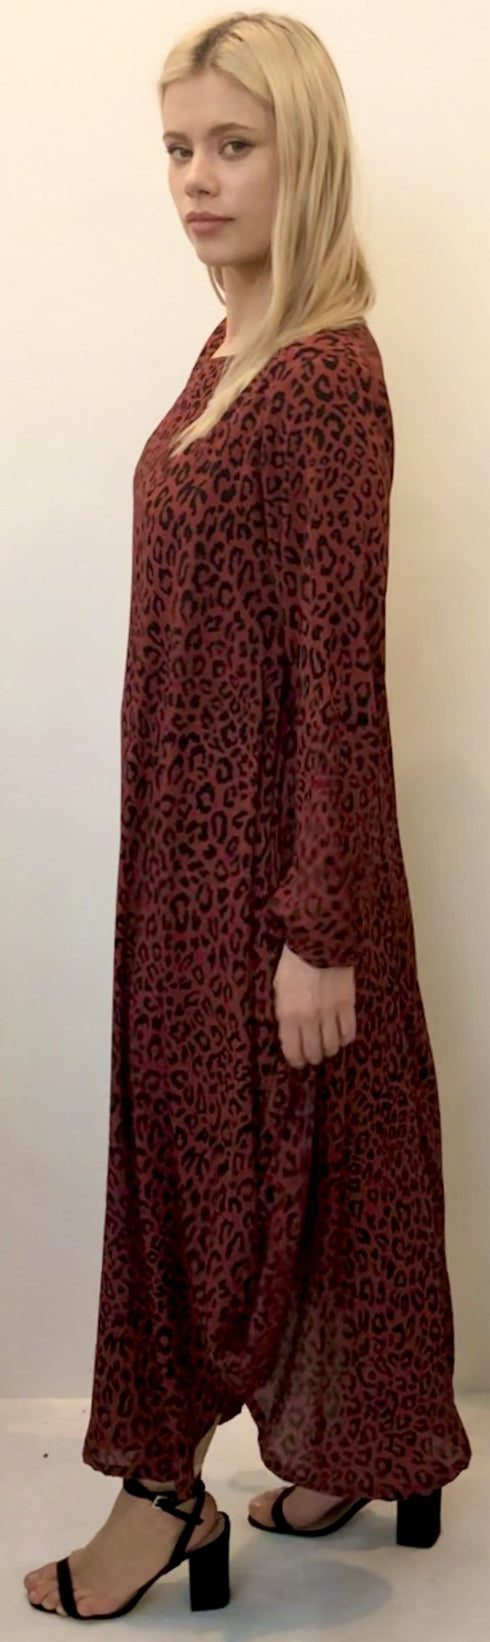 Dress The Oversized Dress - Maroon Animal dubai outfit dress brunch fashion mums